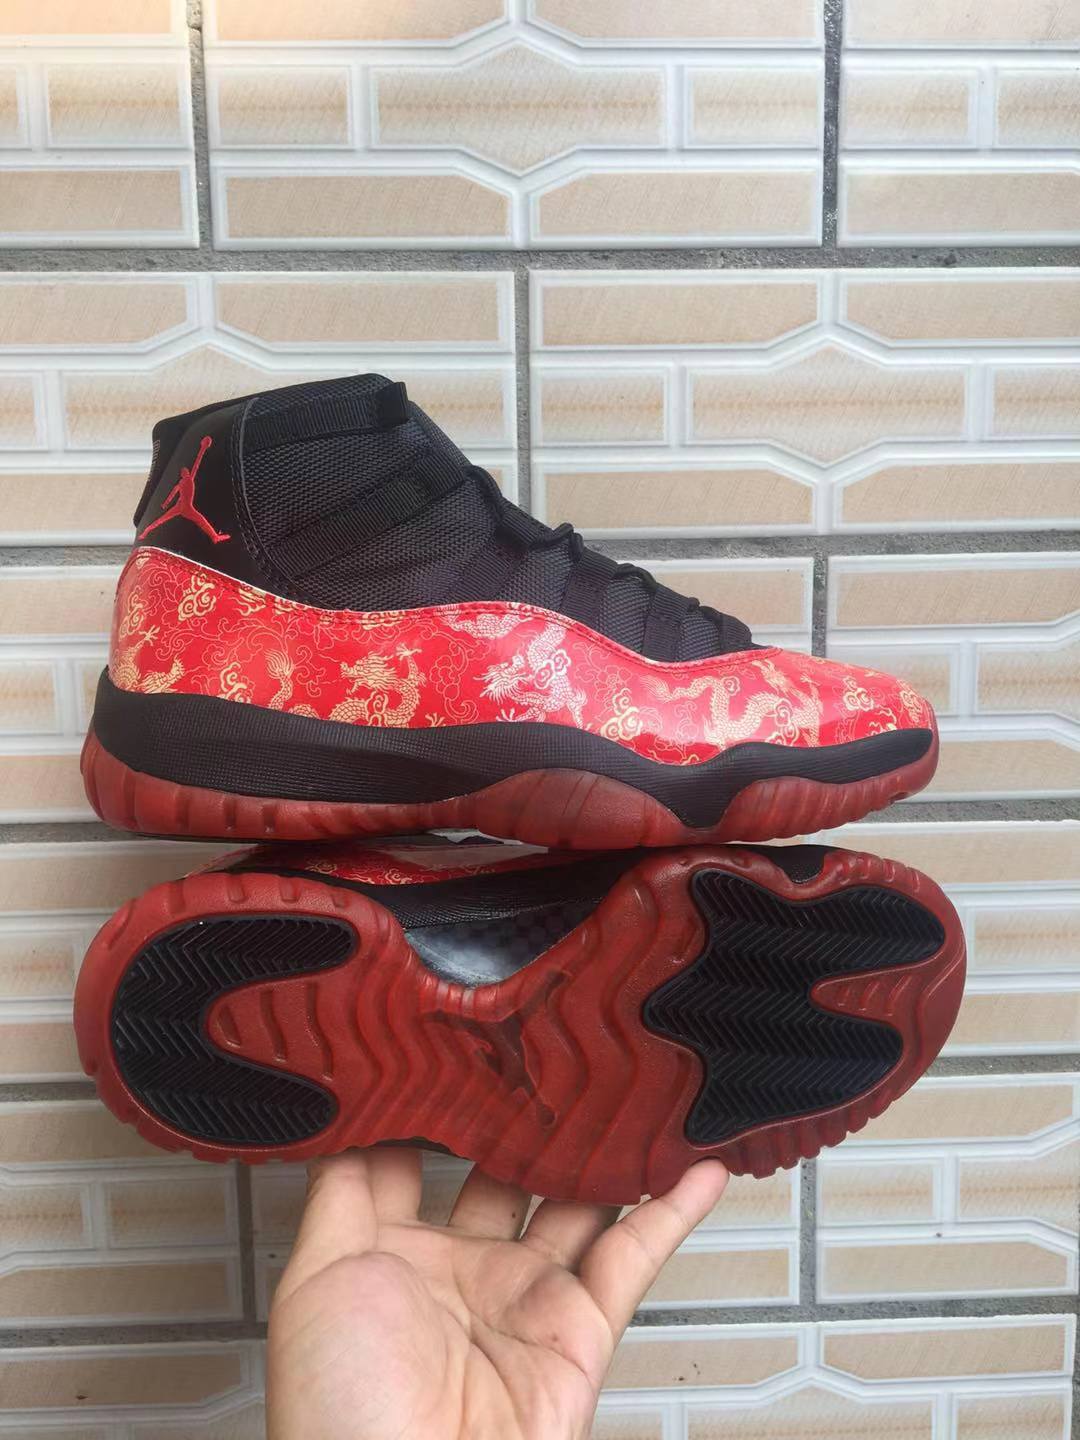 New Air Jordan 11 Red Dragon Black Shoes